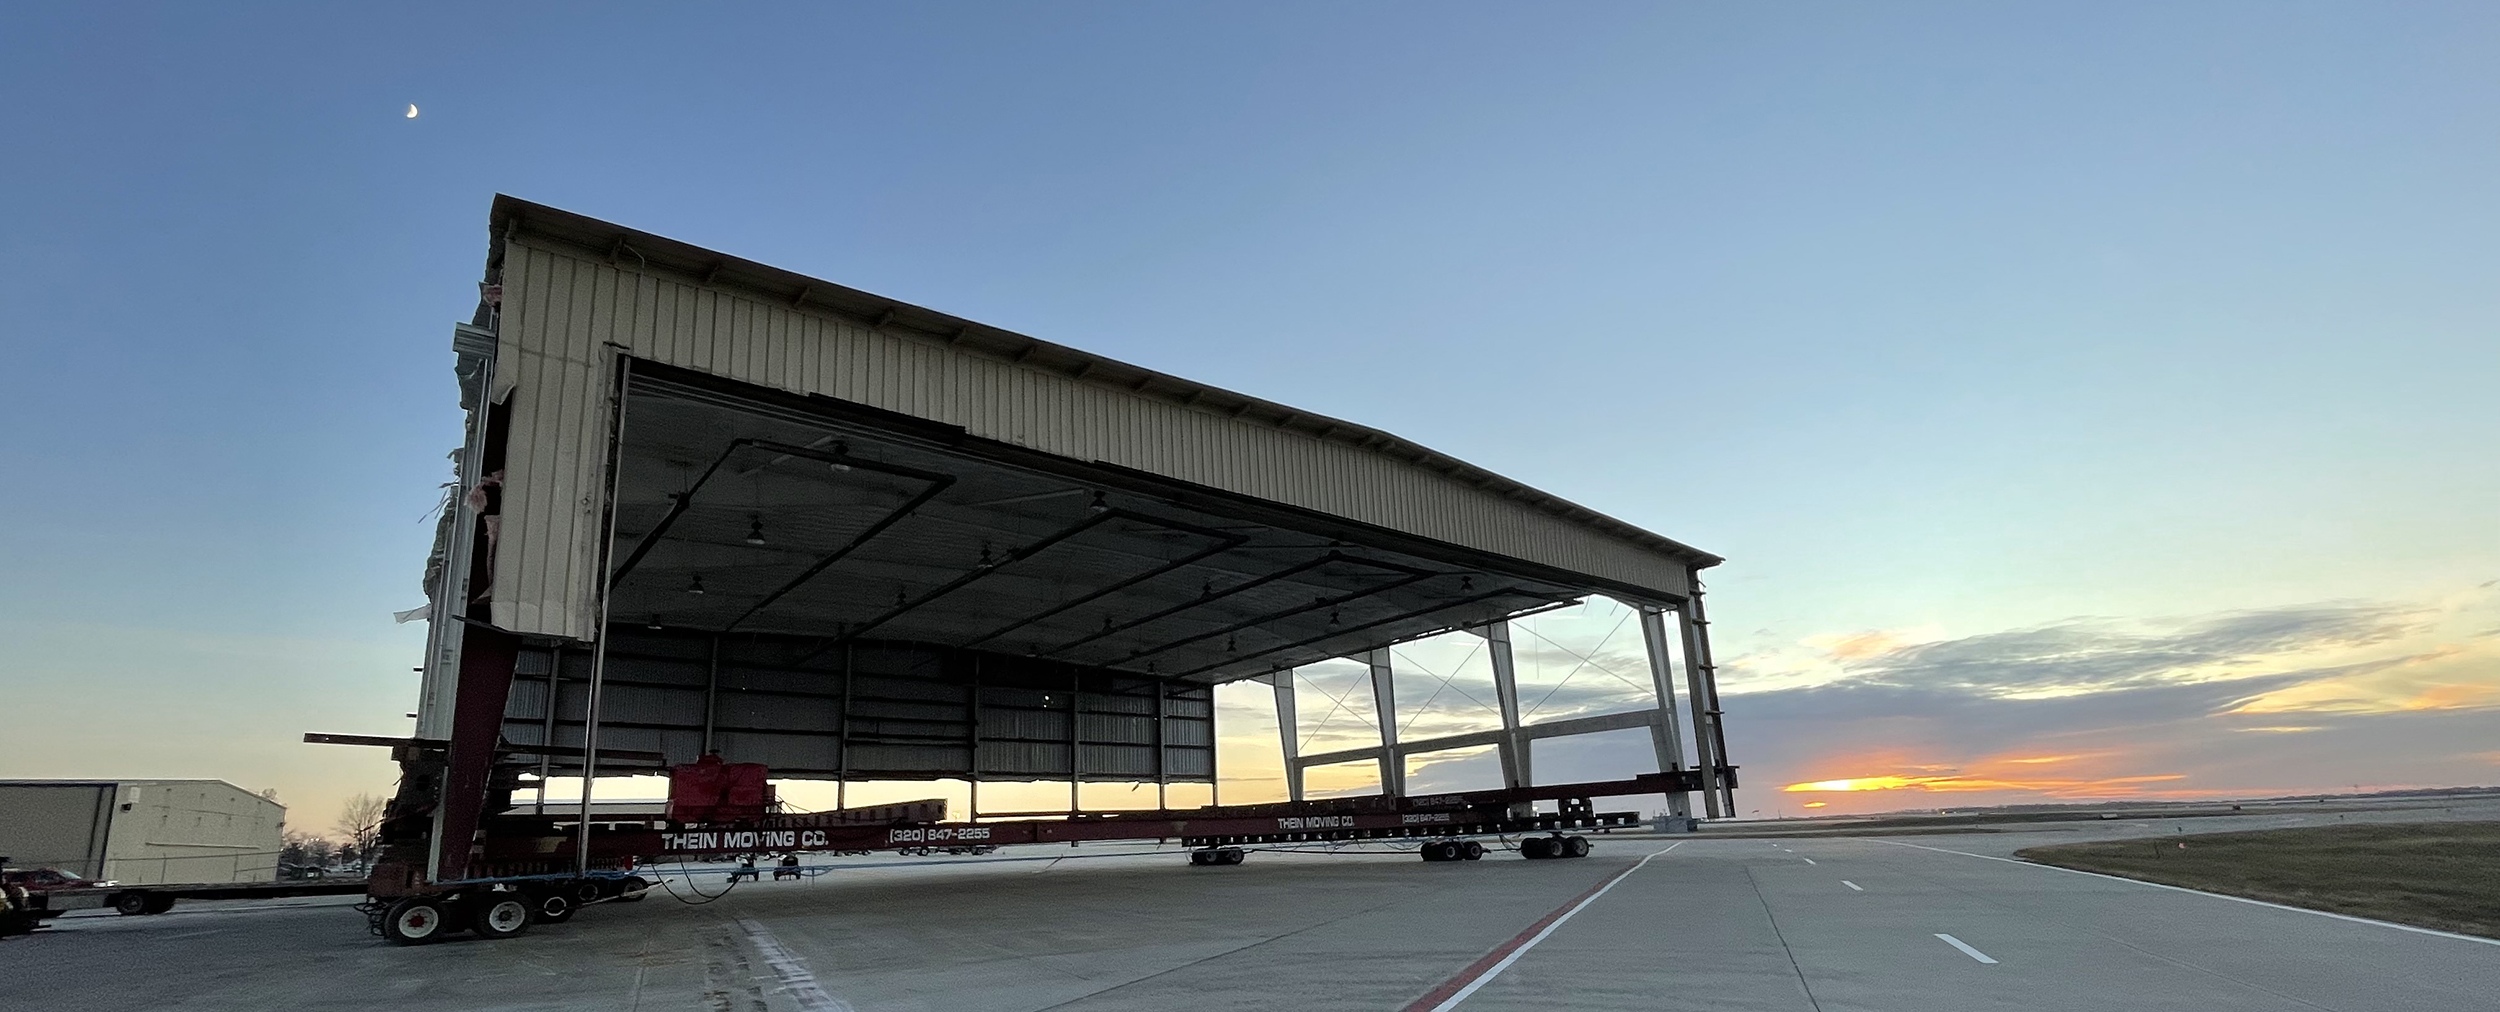 Hangar Relocation at Dusk